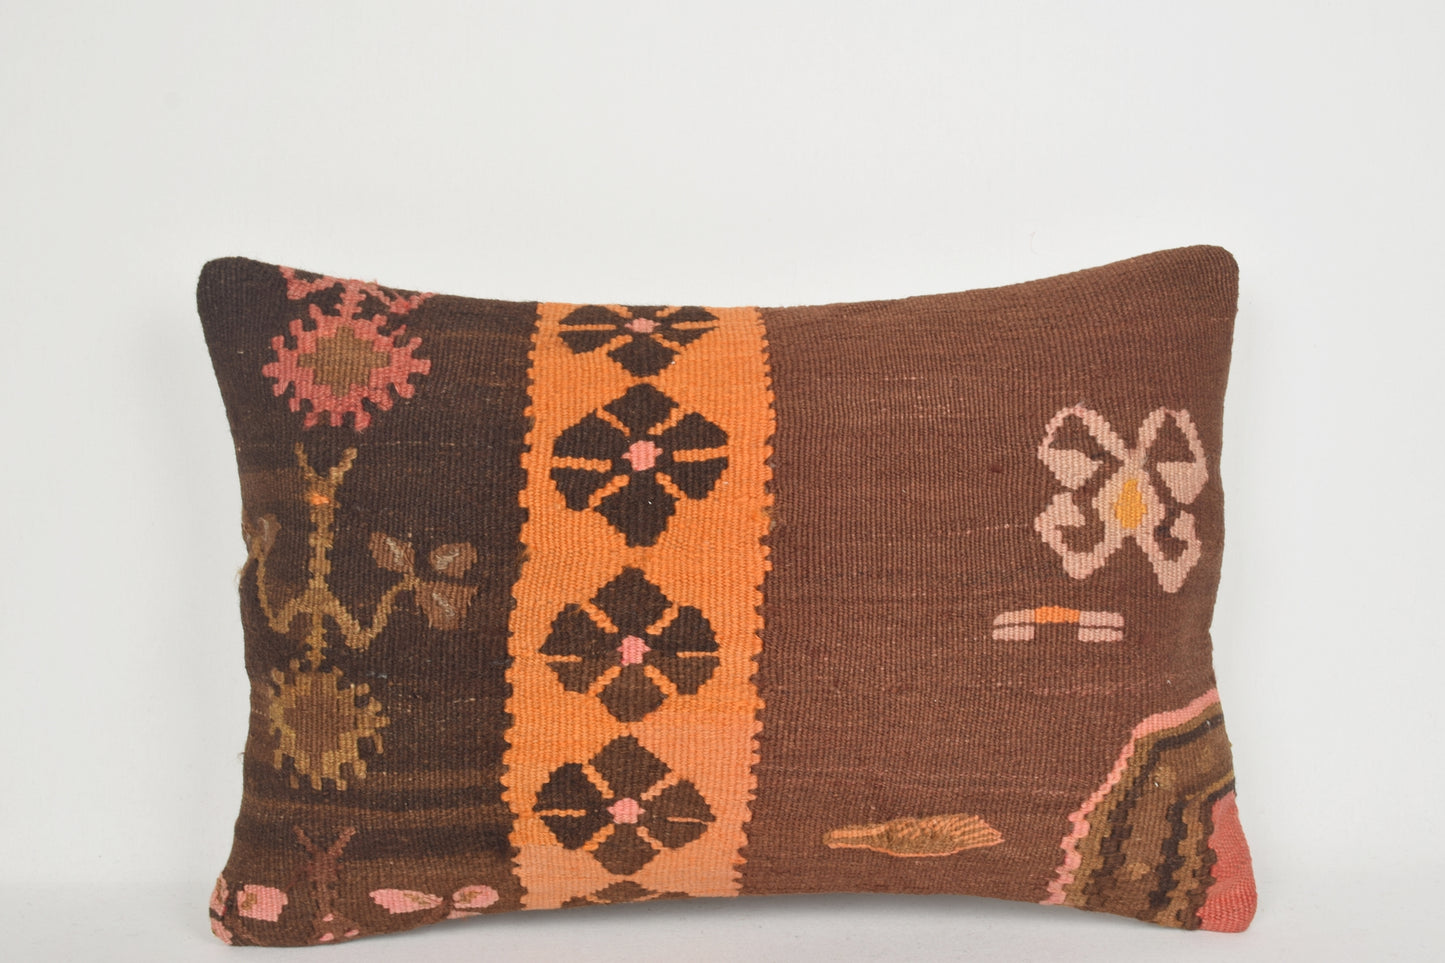 Kilim Pillow Canada E00171 Lumbar Knitting Ethnic Traditional Artwork